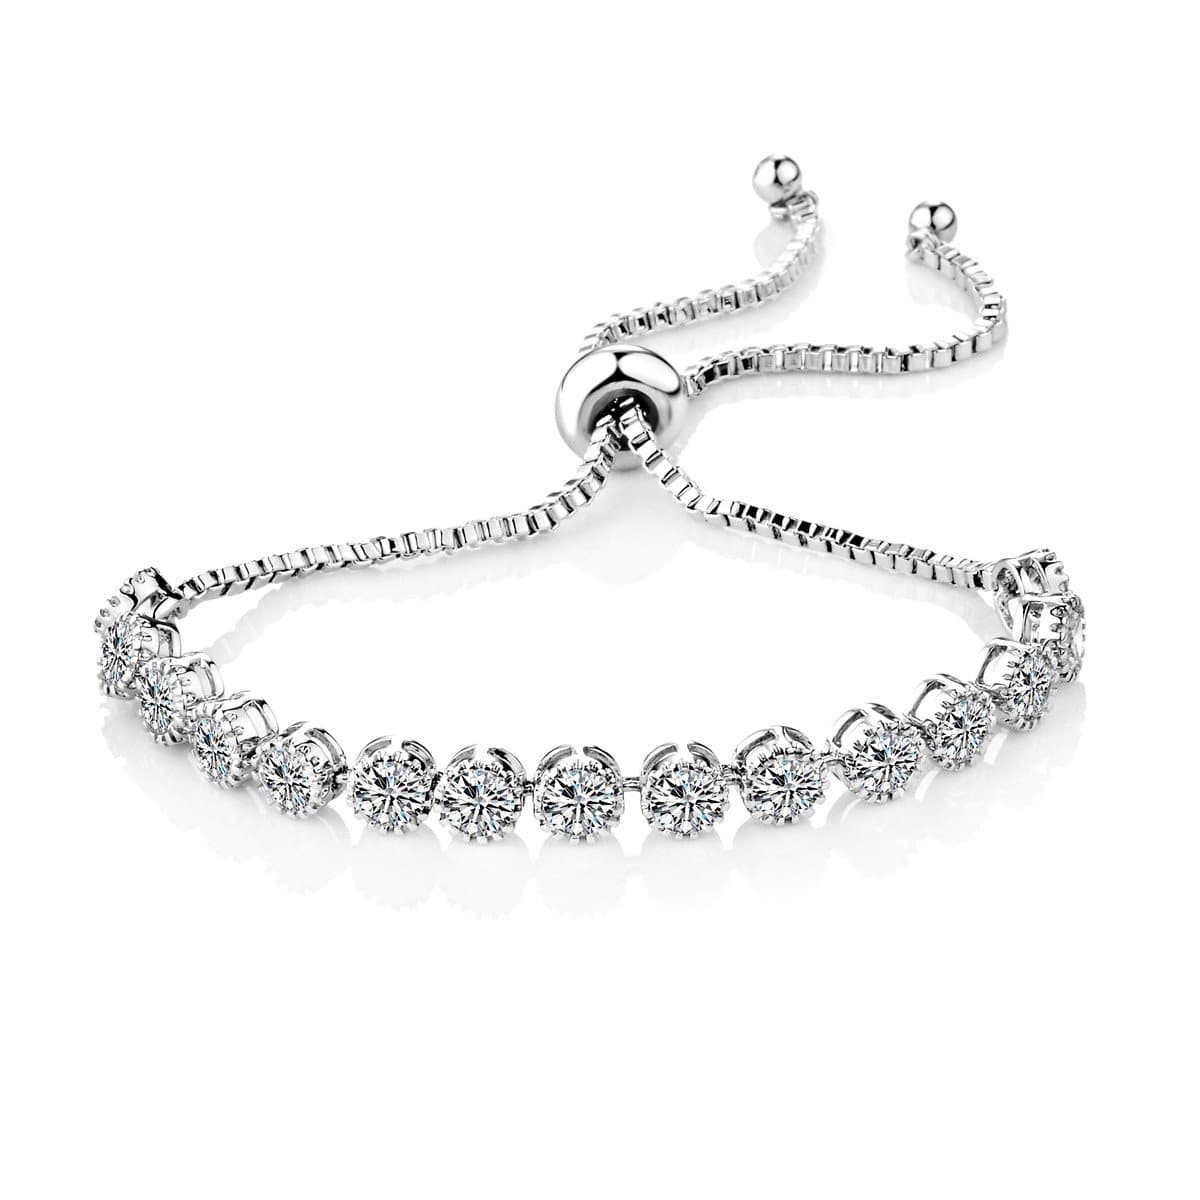 Solitaire Crystal Friendship Bracelet with Zircondia® Crystals by Philip Jones Jewellery